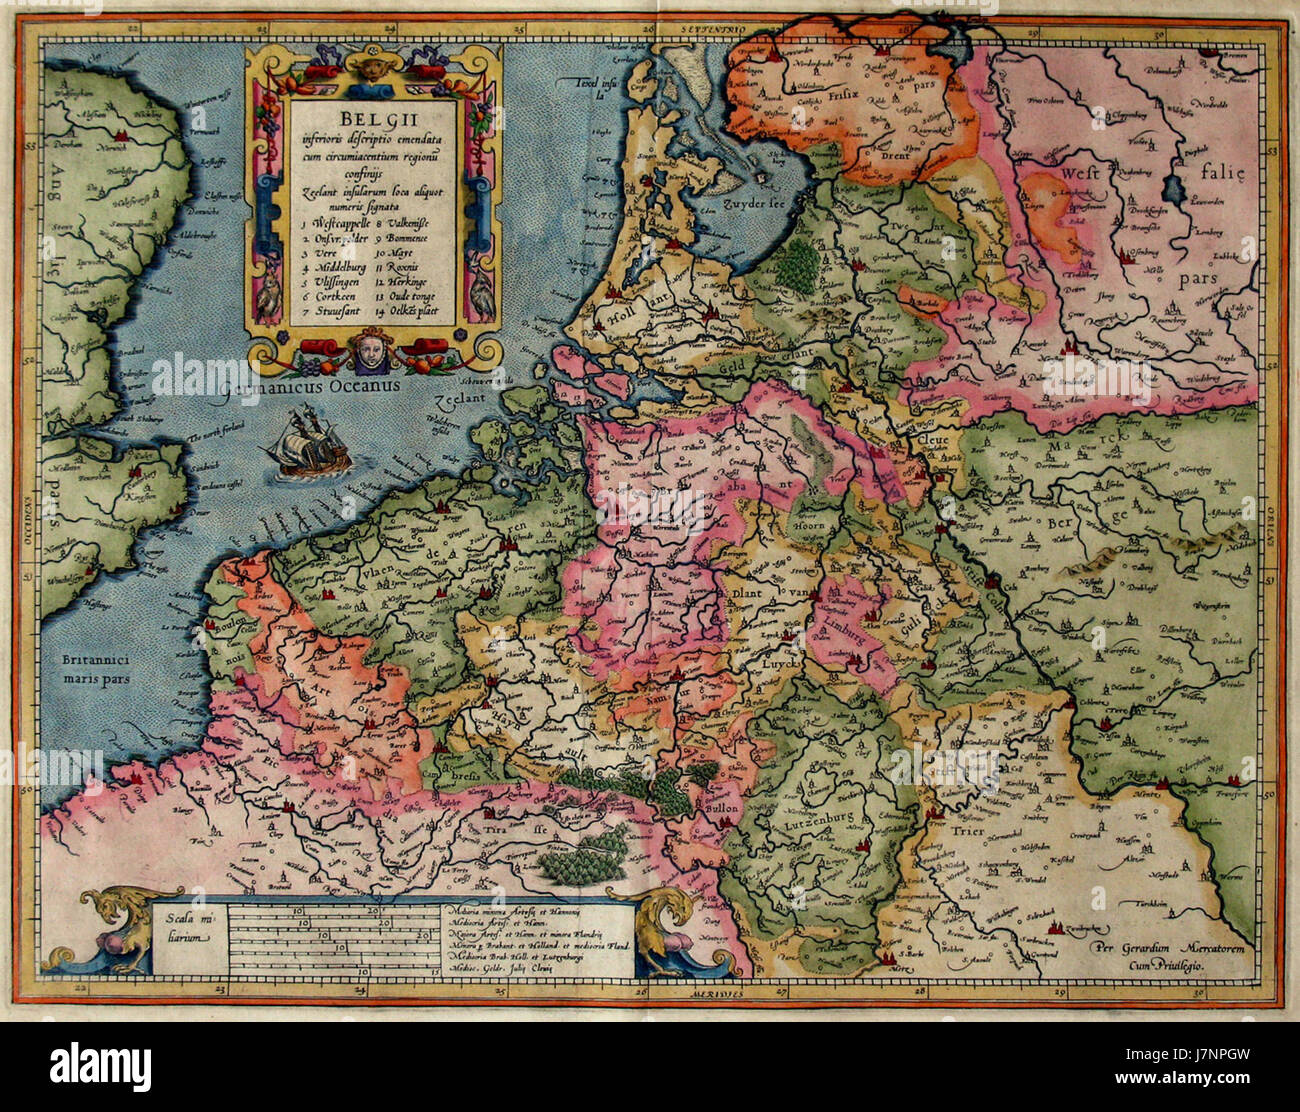 1606 Belgii Mercator Foto Stock